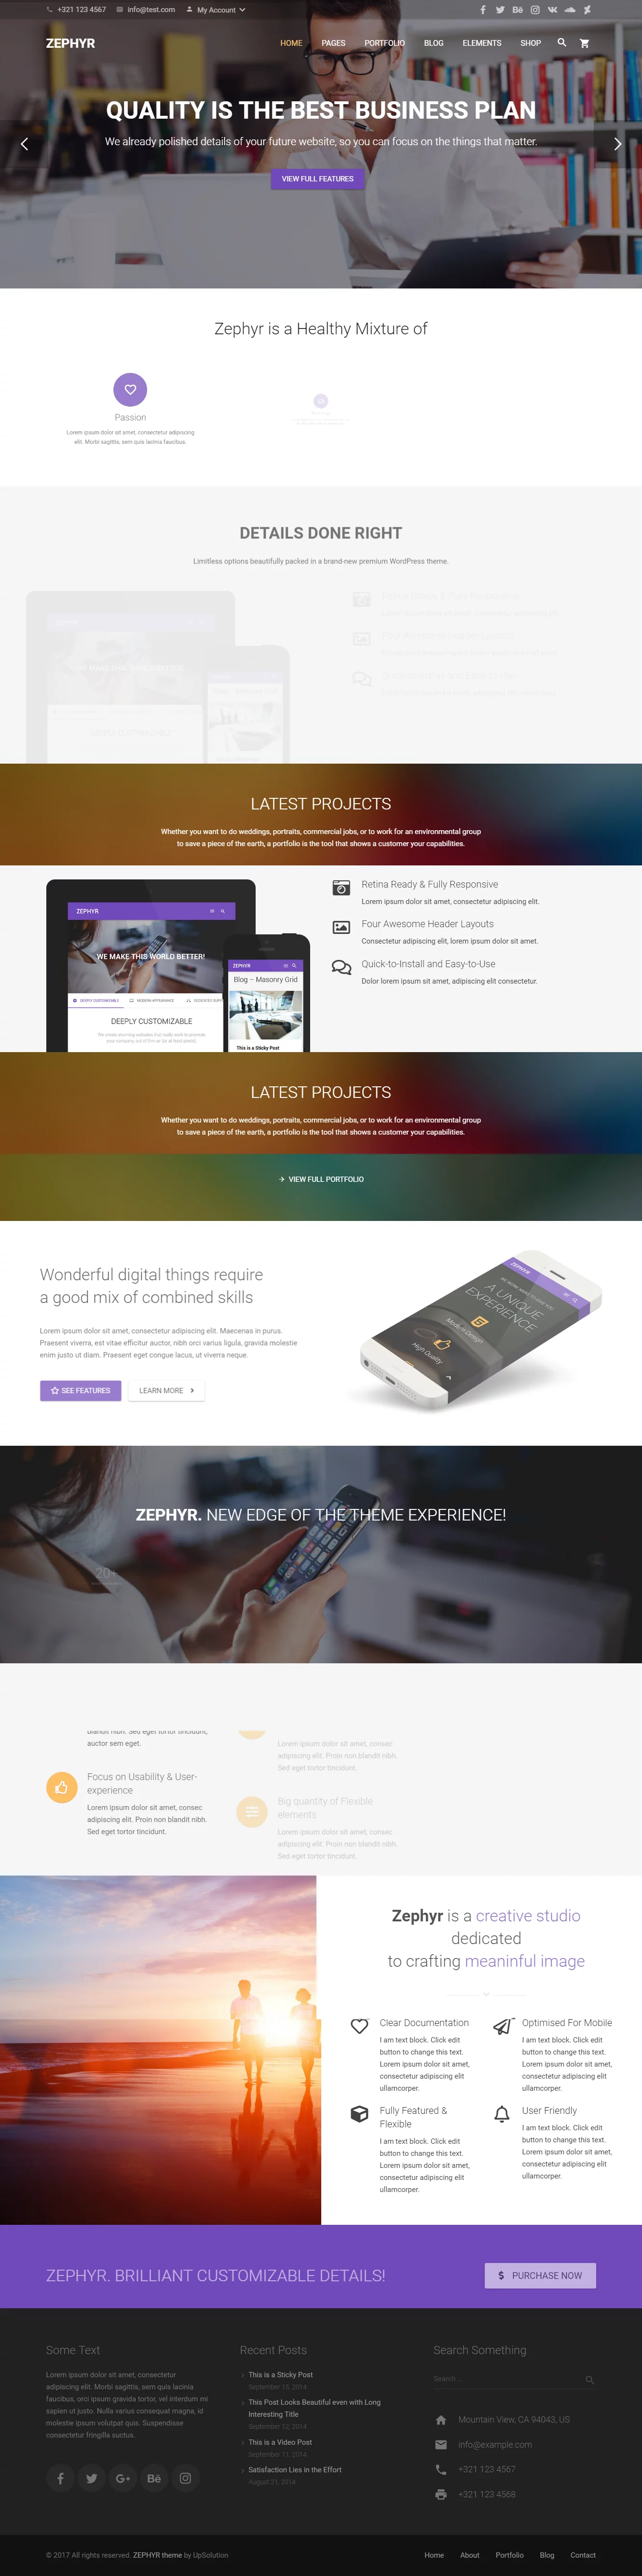 Zephyr - Best Premium Material Design WordPress Theme